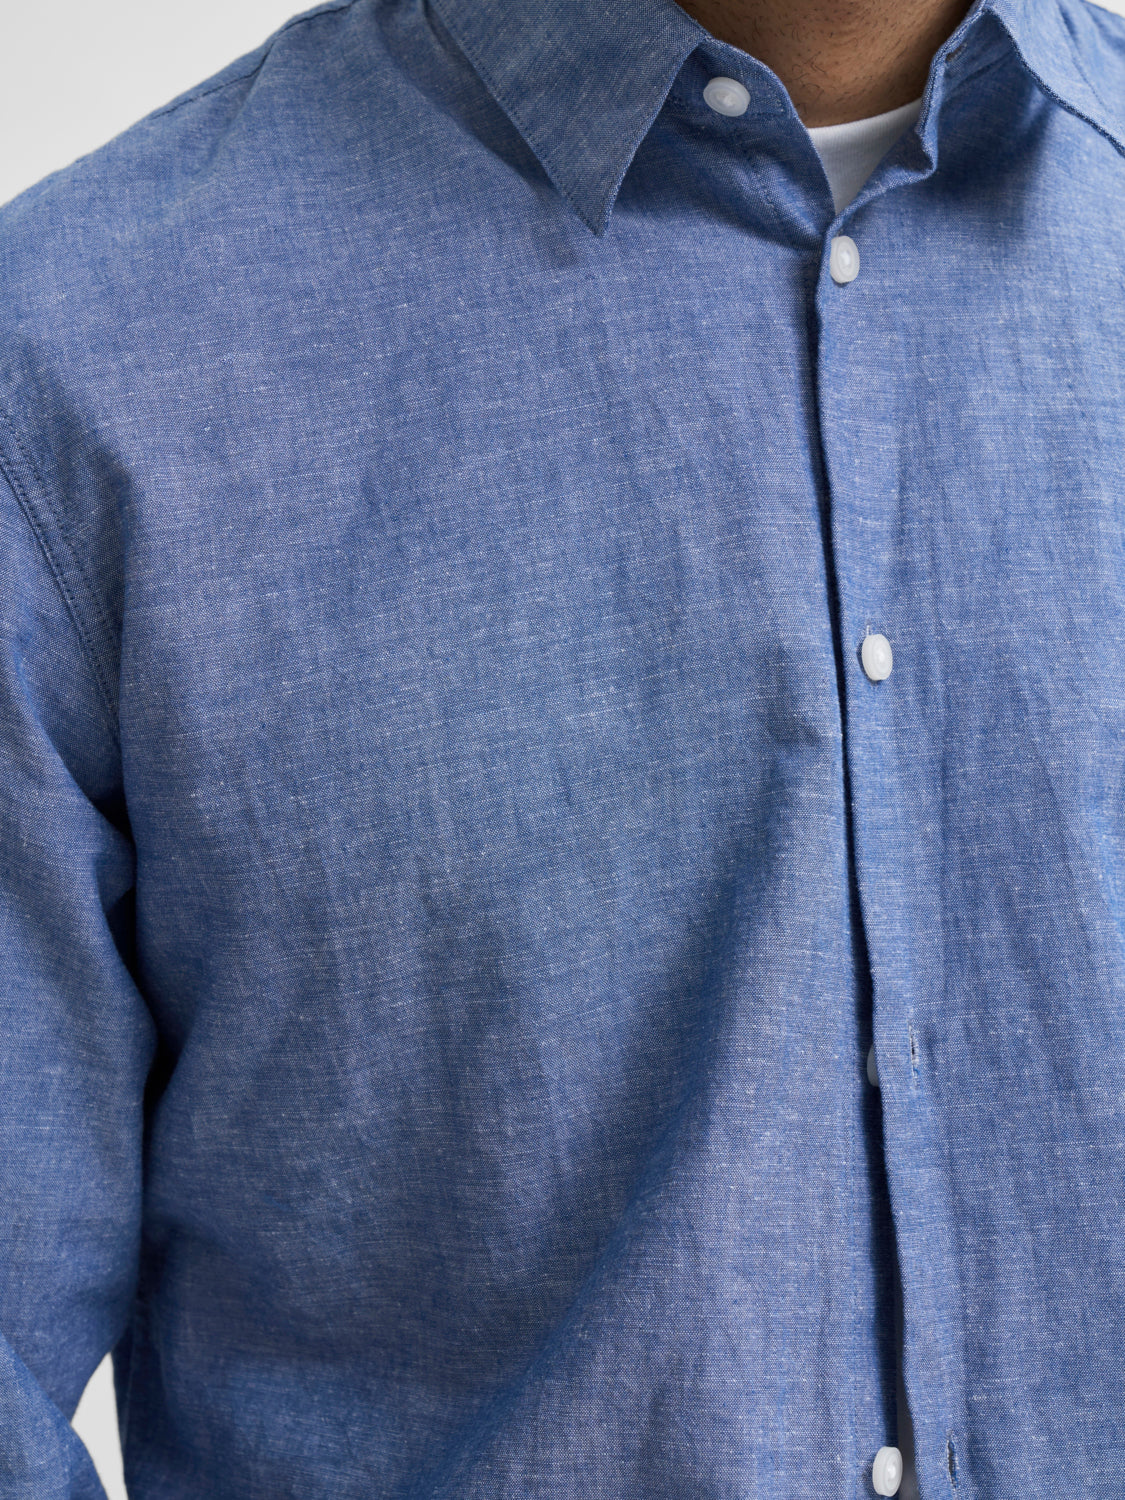 SLHSLIMNEW-LINEN Shirts - Medium Blue Denim